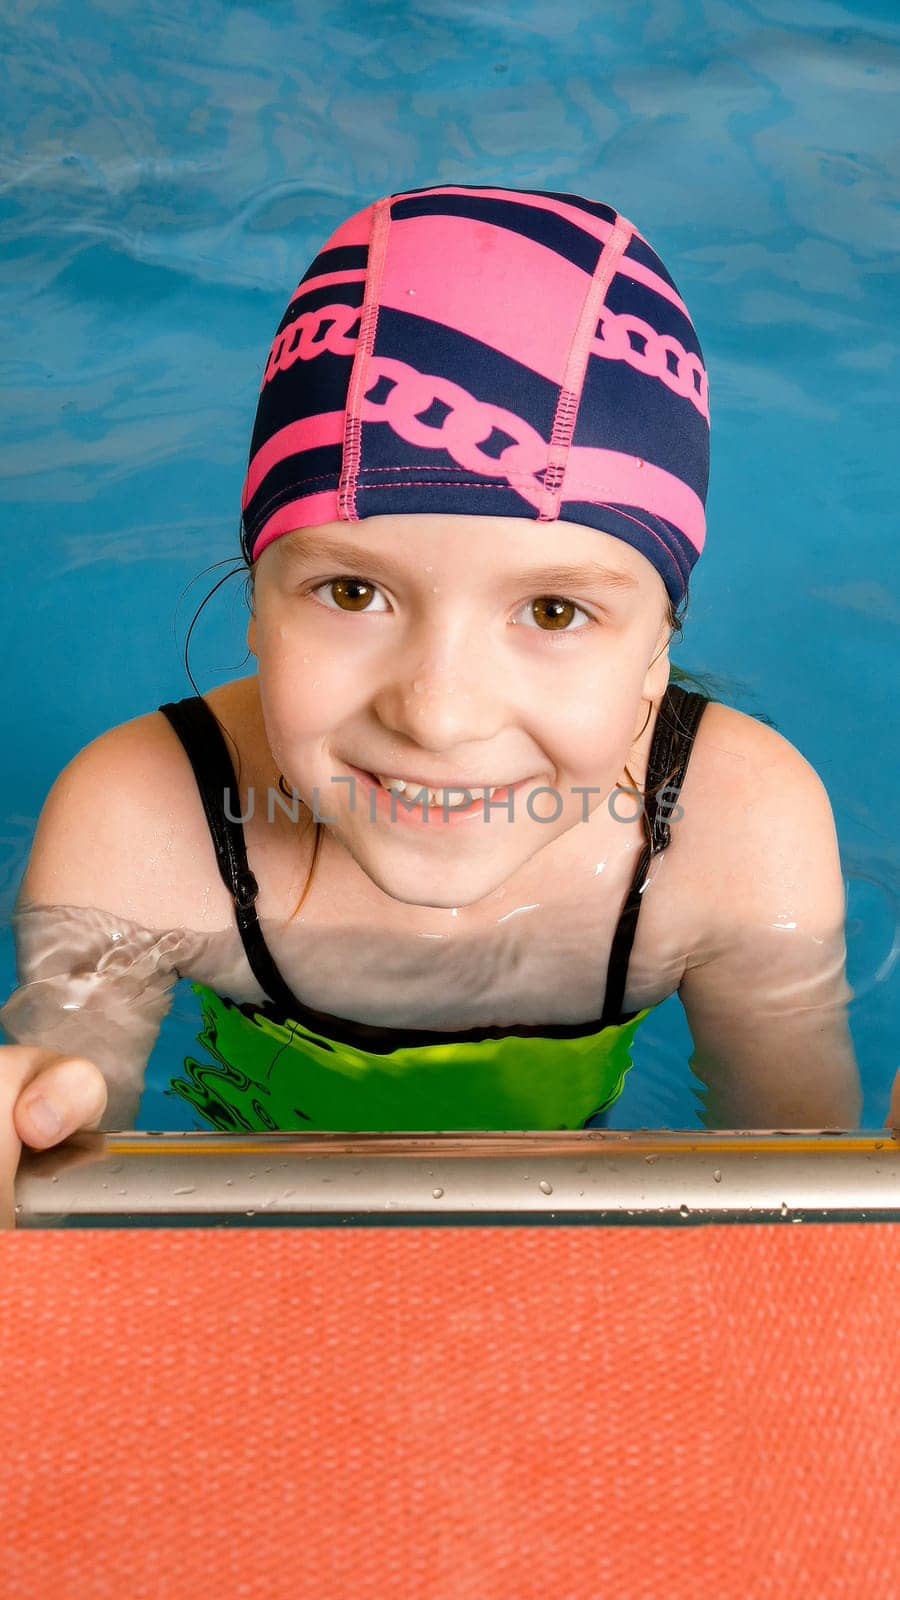 Portrait of a little girl having fun in indoor swimming pool